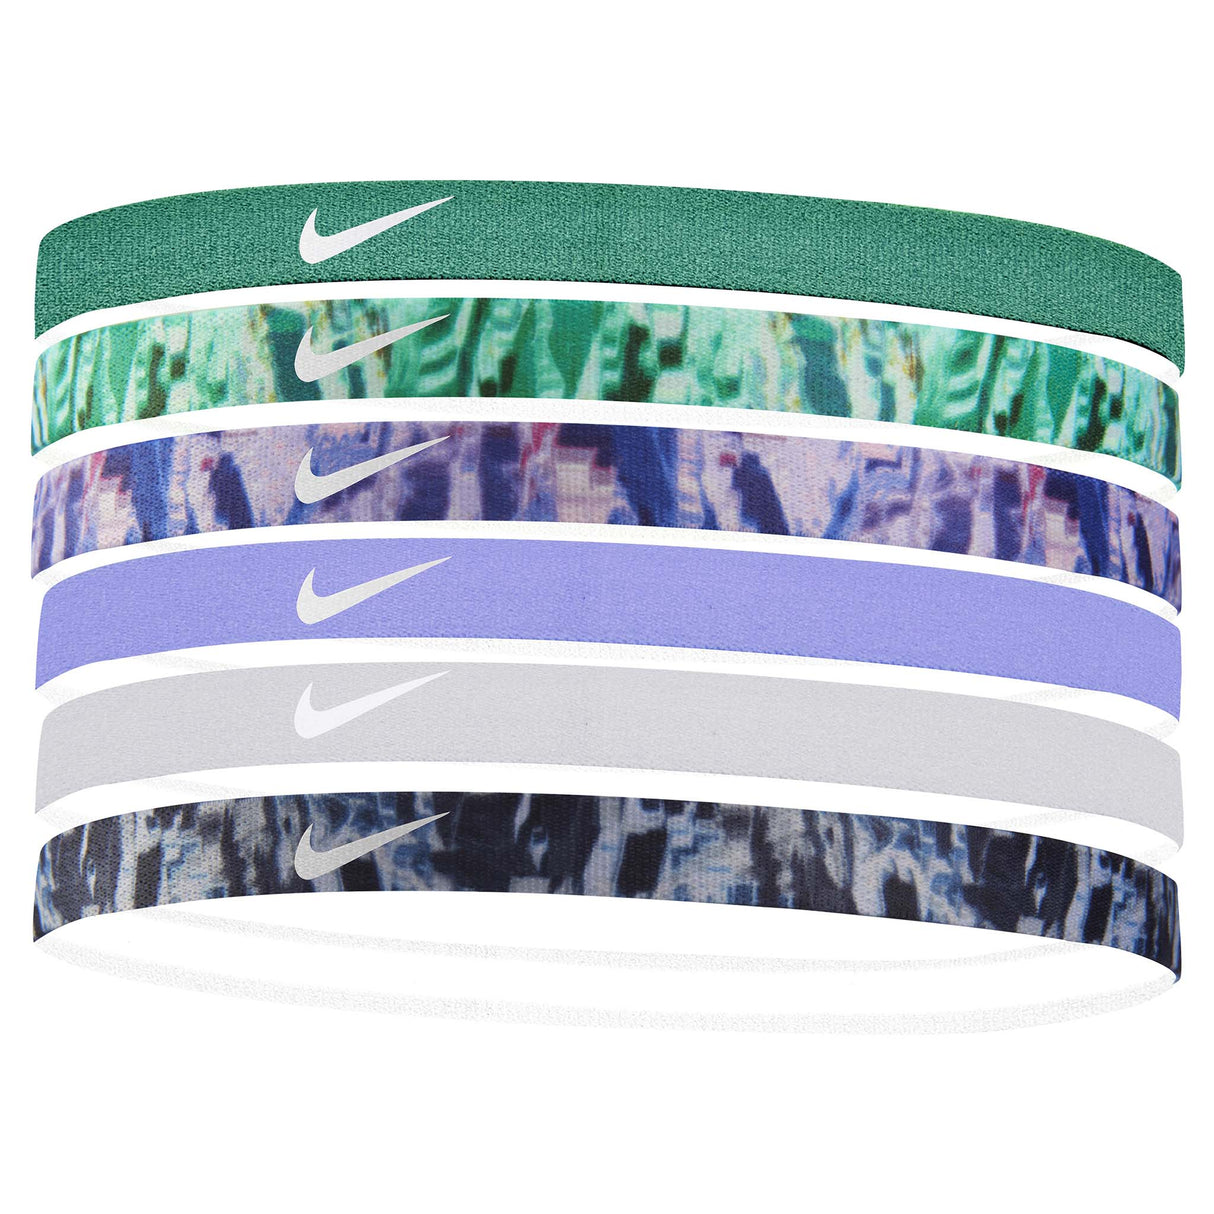 Nike printed 6pk bandeaux sport assortis pour cheveux-Neptune Green / Malachite / Pure Platinum